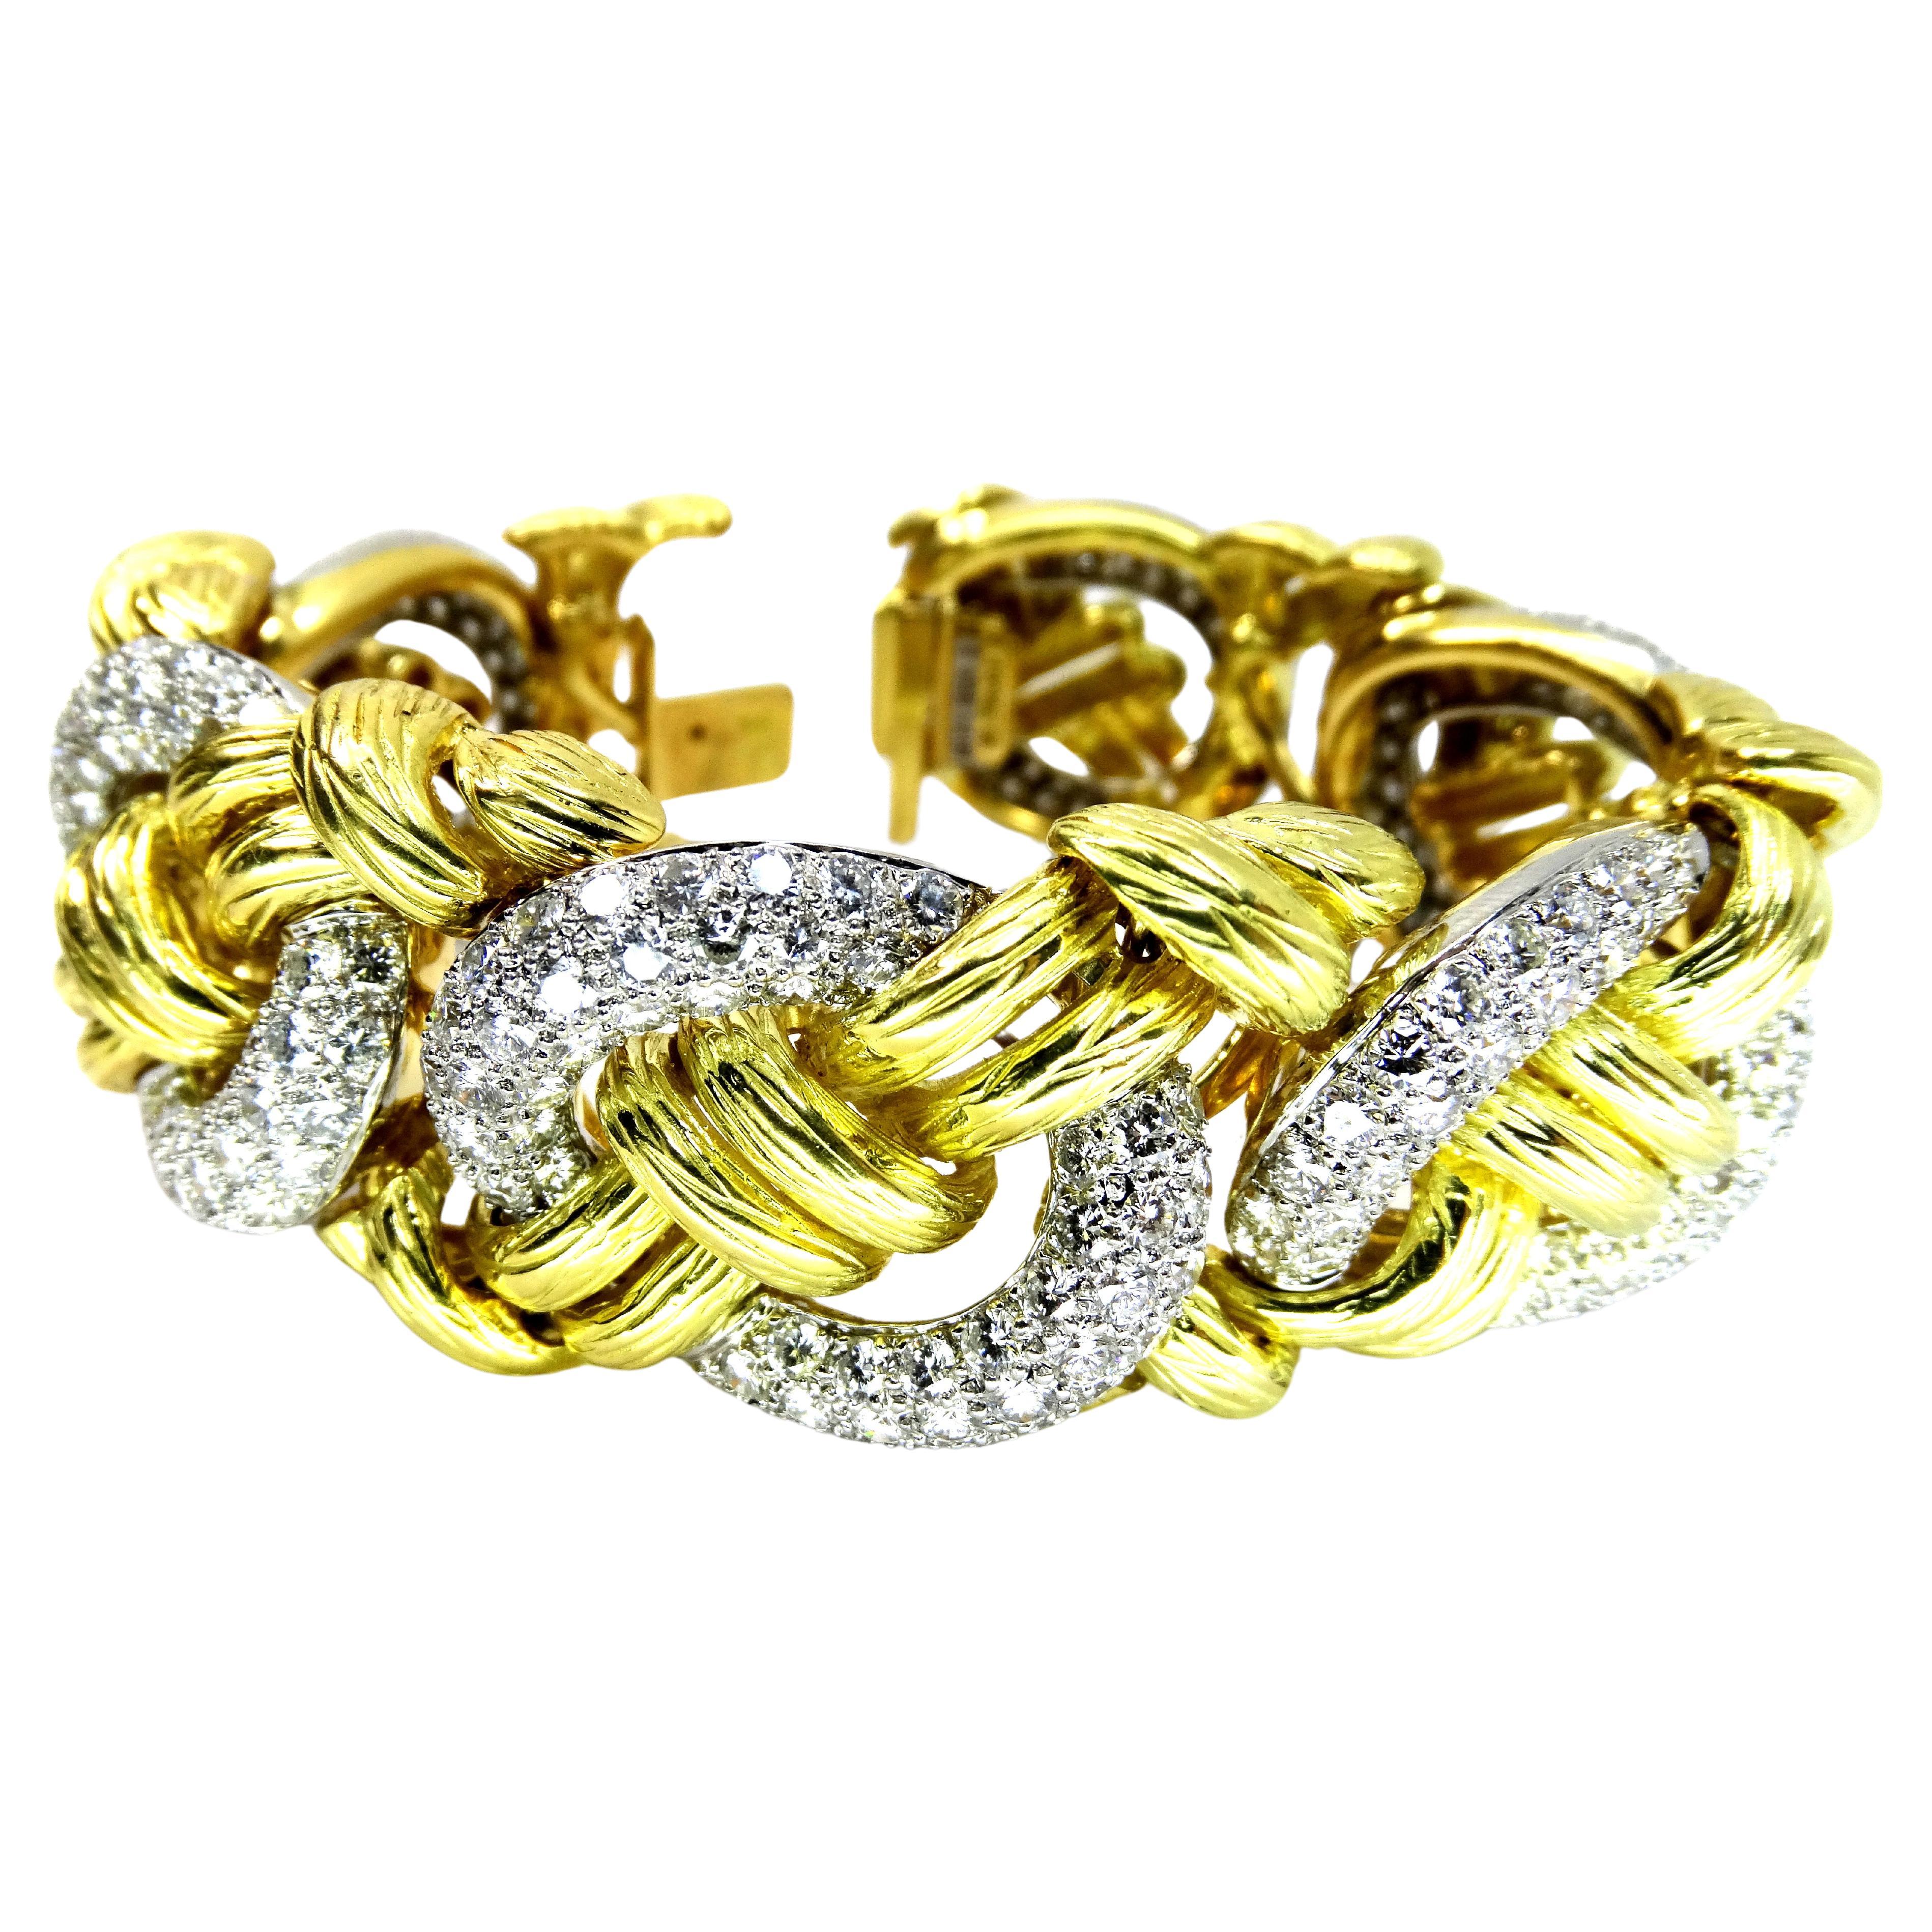 Hammerman Jewels Gold/Platinum Bracelet with Diamonds